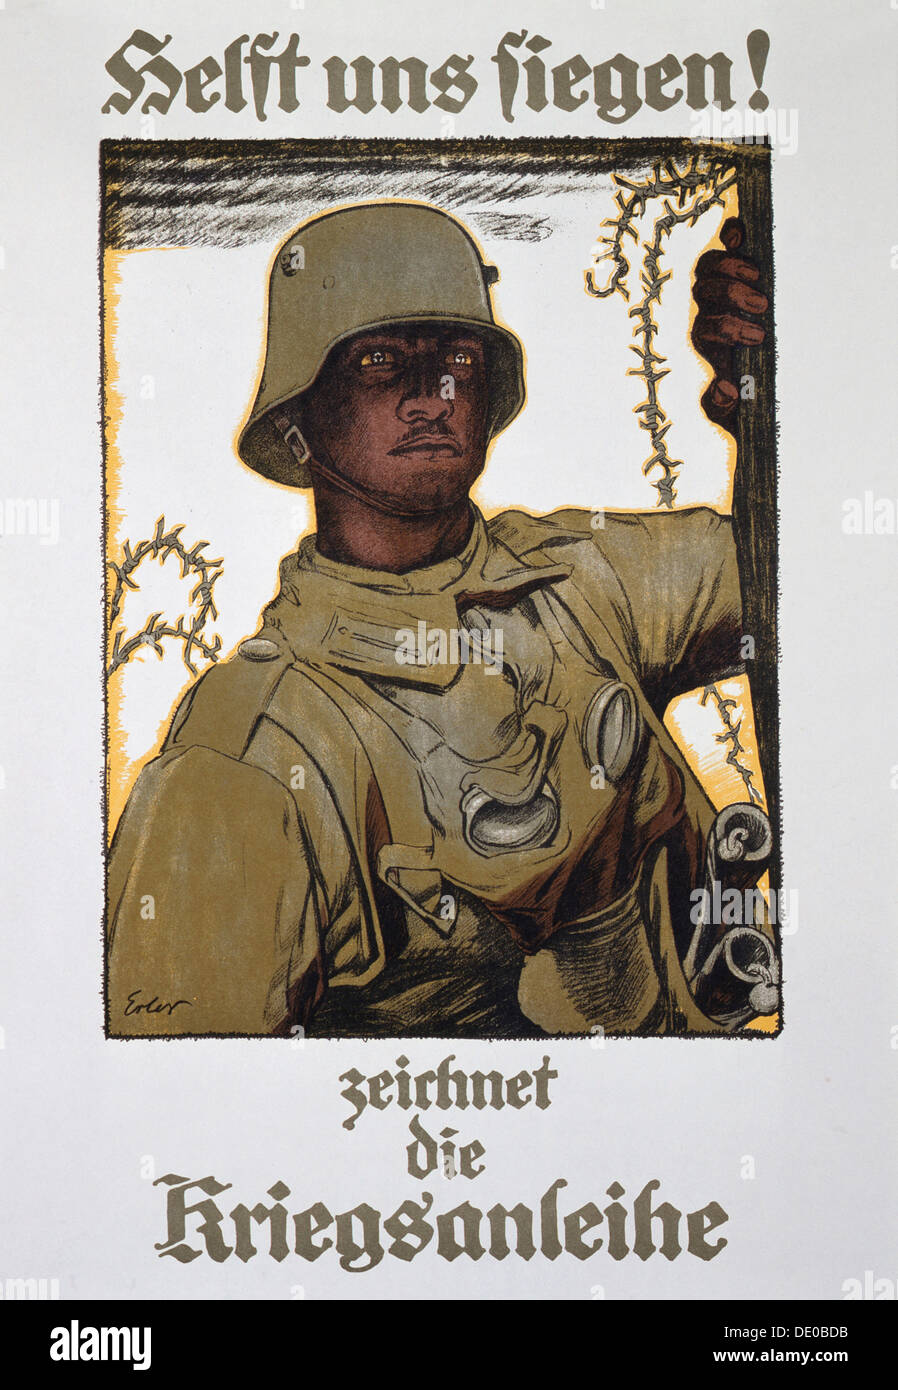 'Helft uns siegen ! - Zeichnet die Kriegsanleihe", affiche de propagande allemande, la Première Guerre mondiale, 1917. Artiste : Fritz Erler Banque D'Images